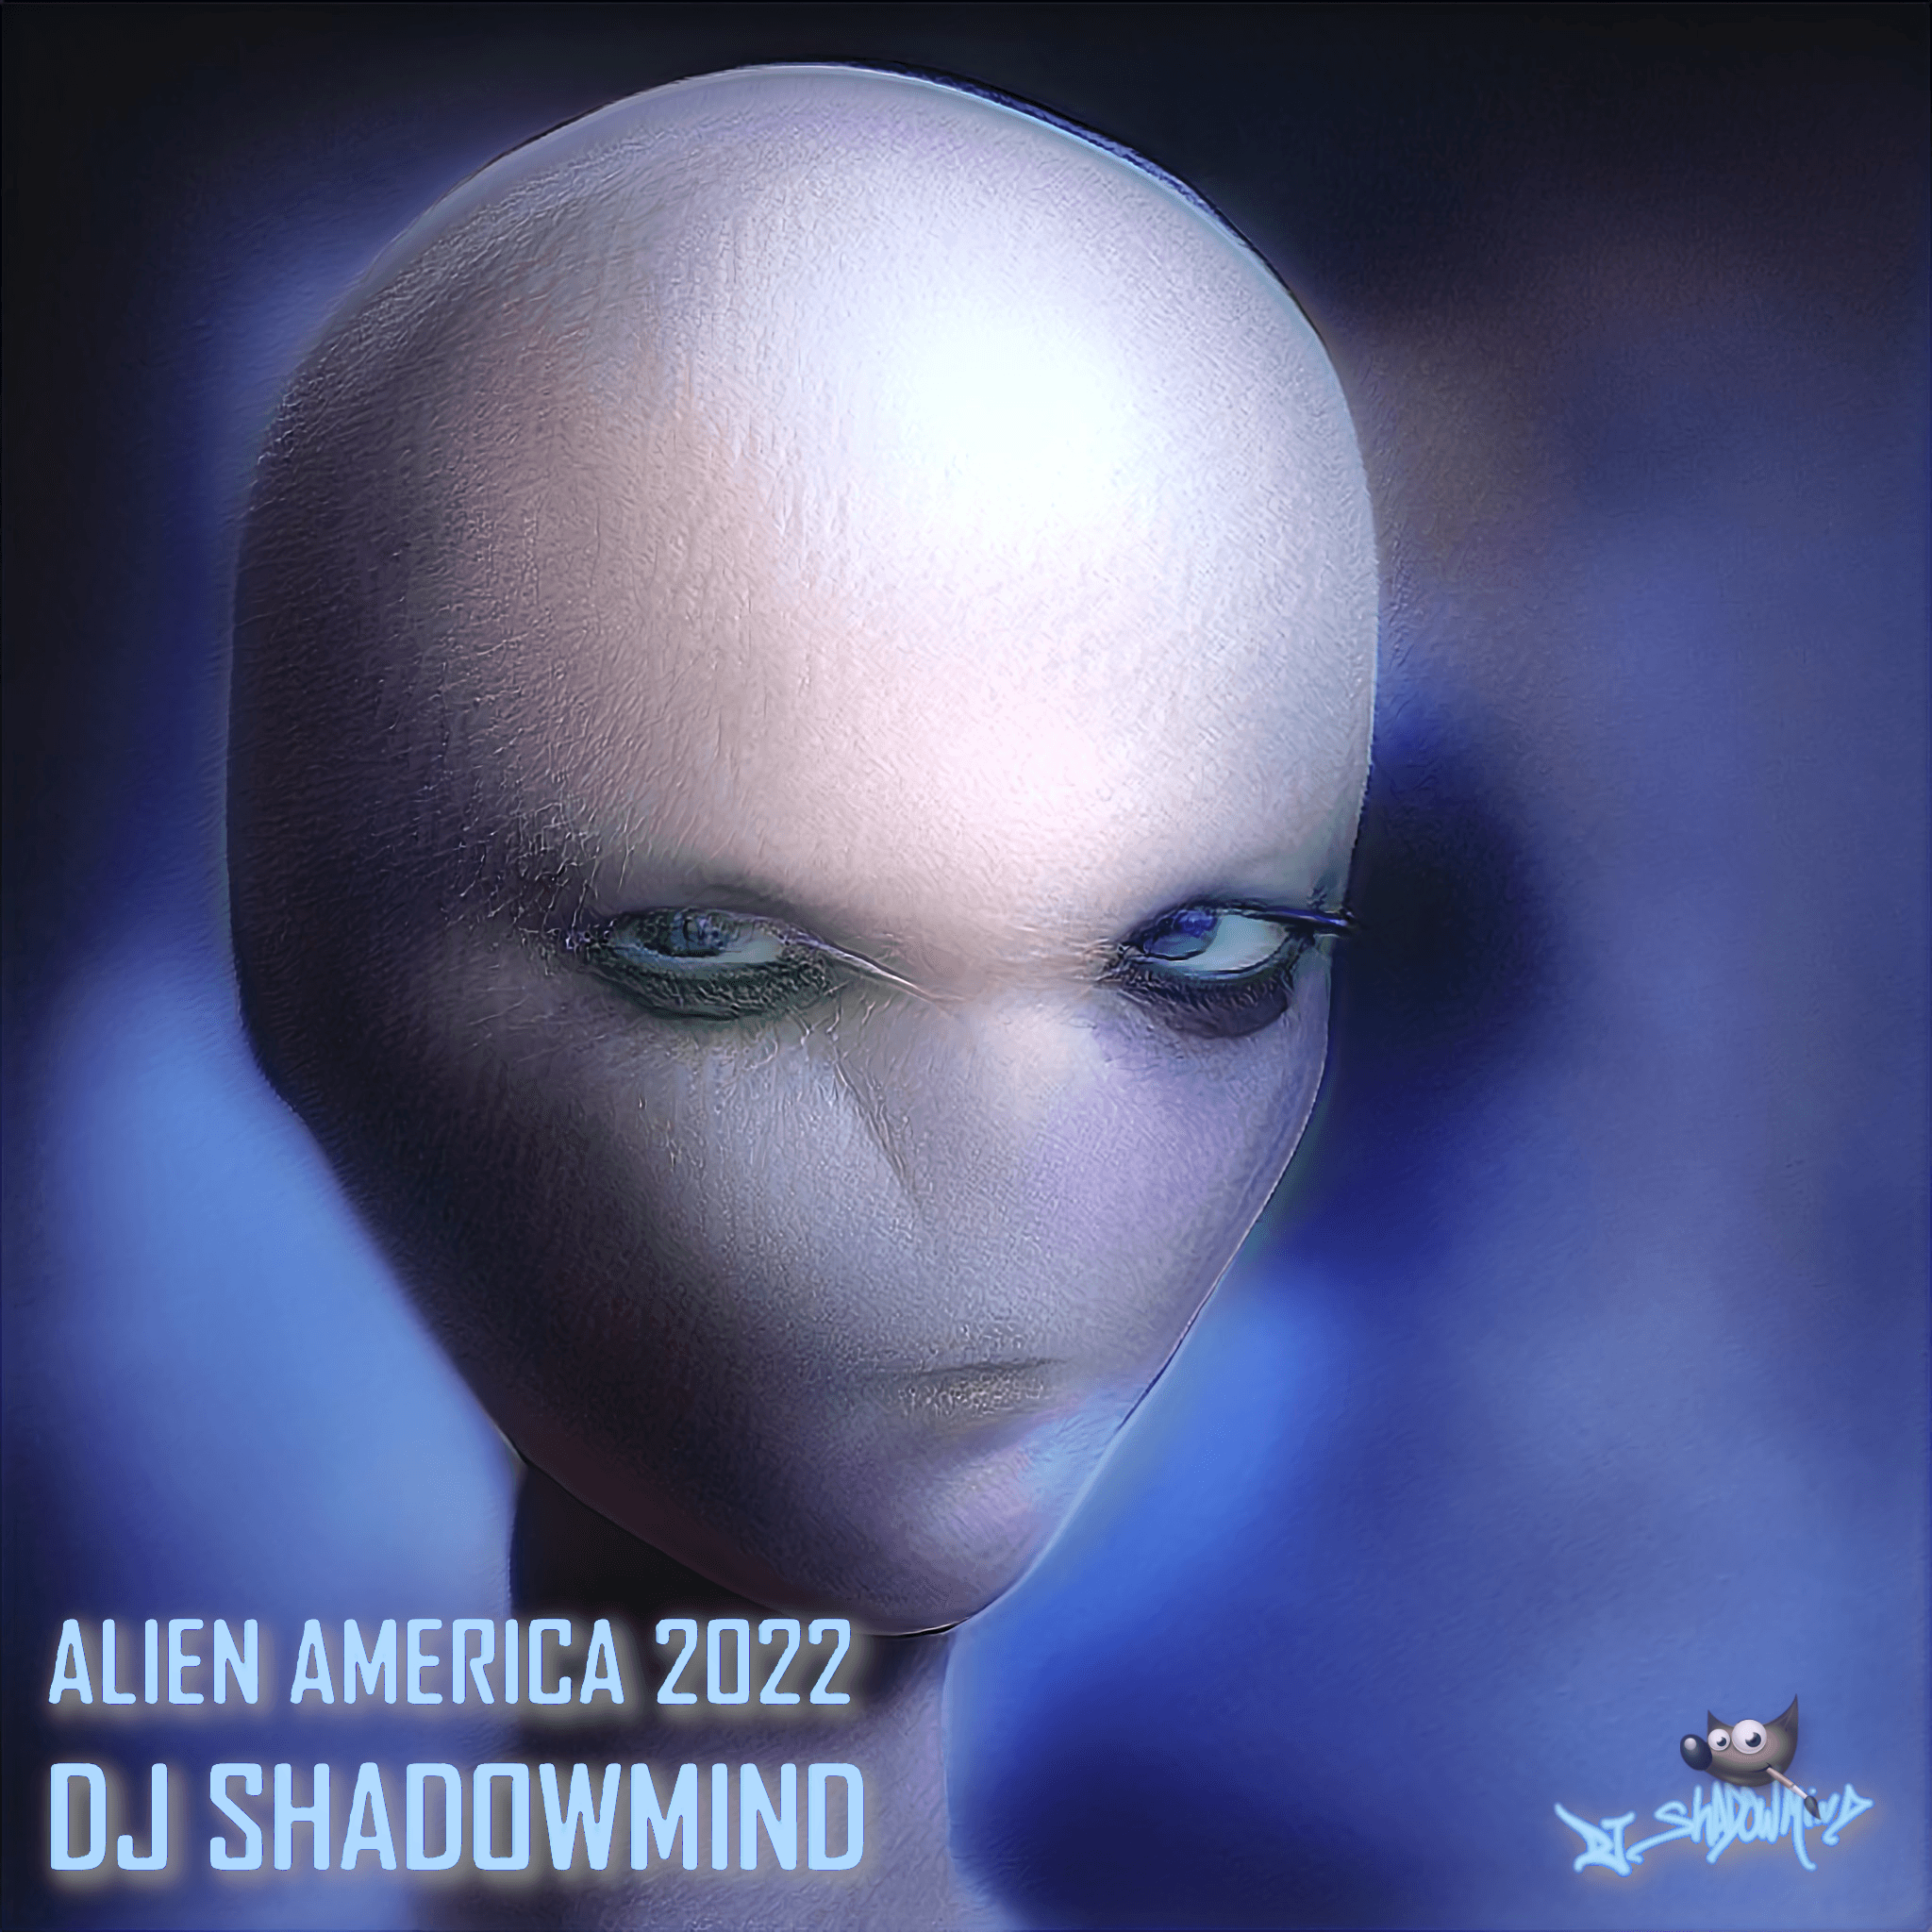 Alien America 2022 - Agent 170